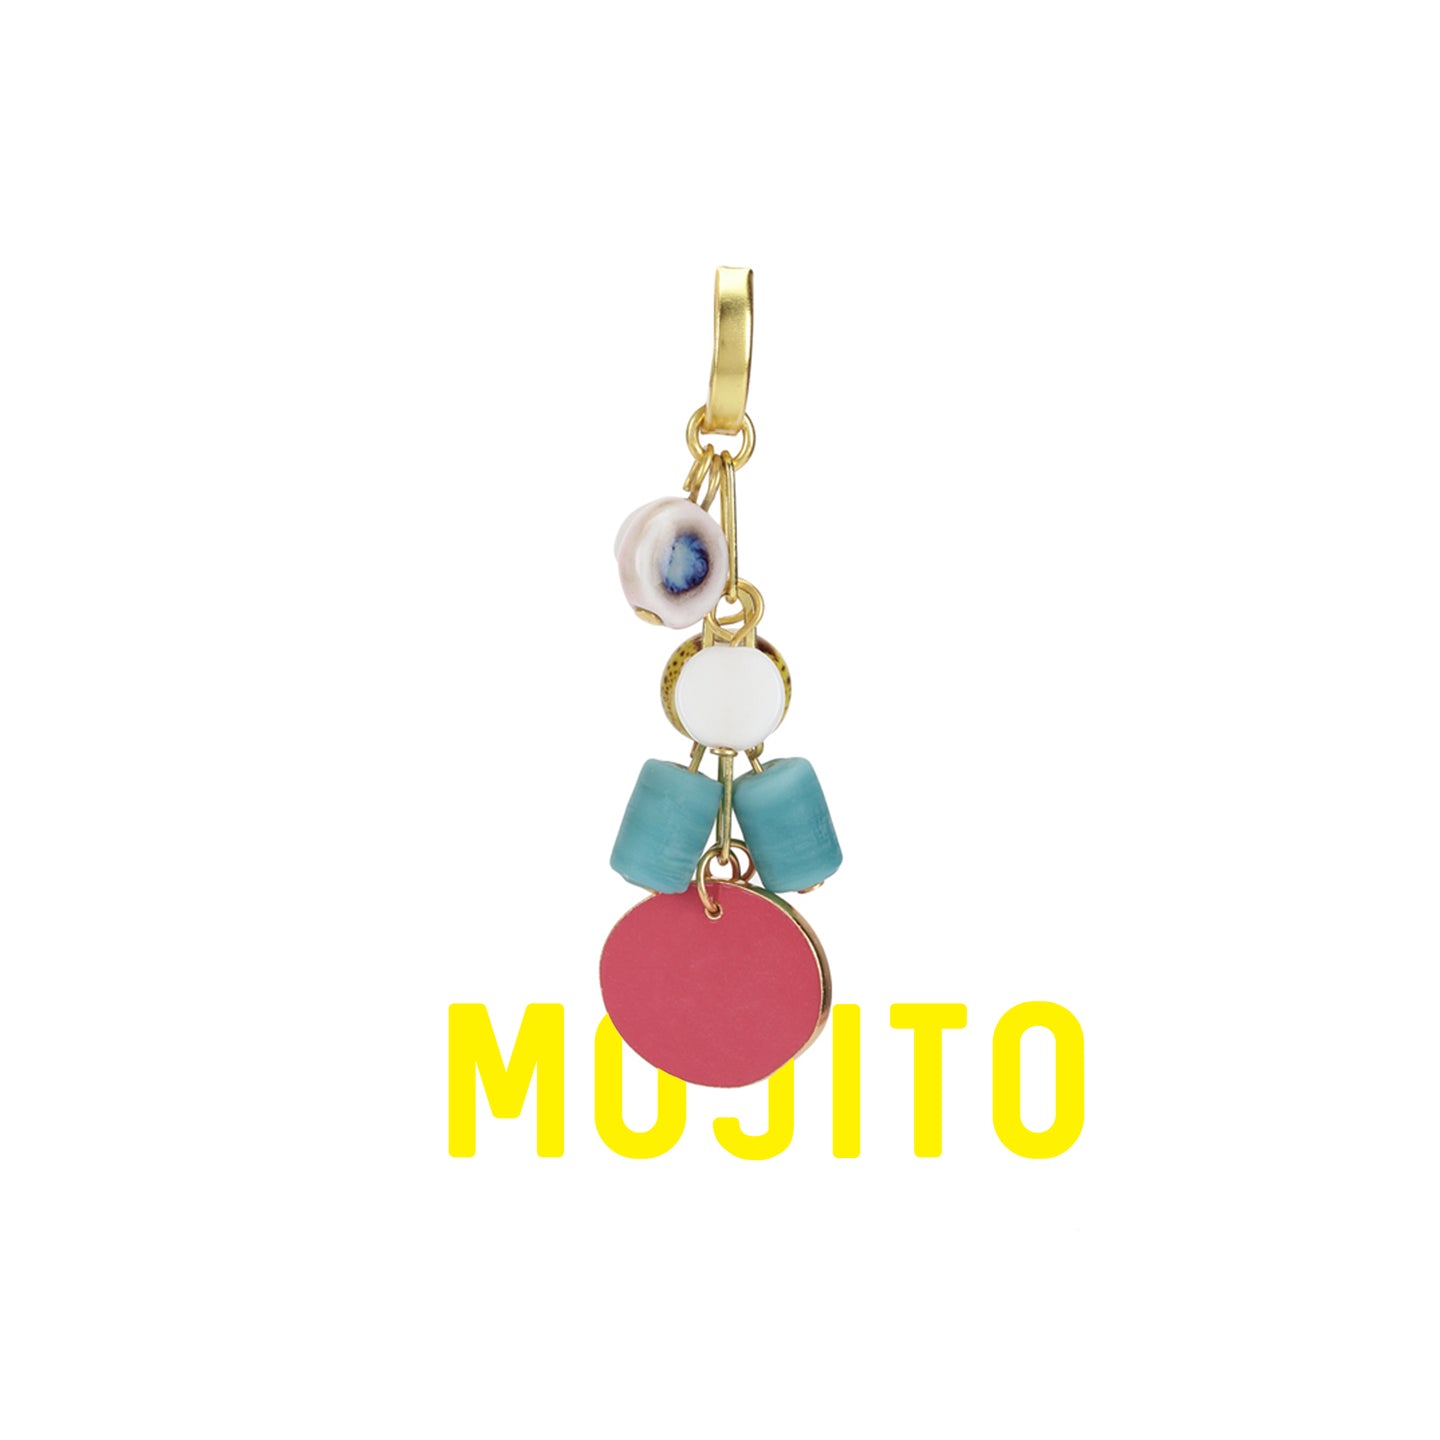 Mojito Earring